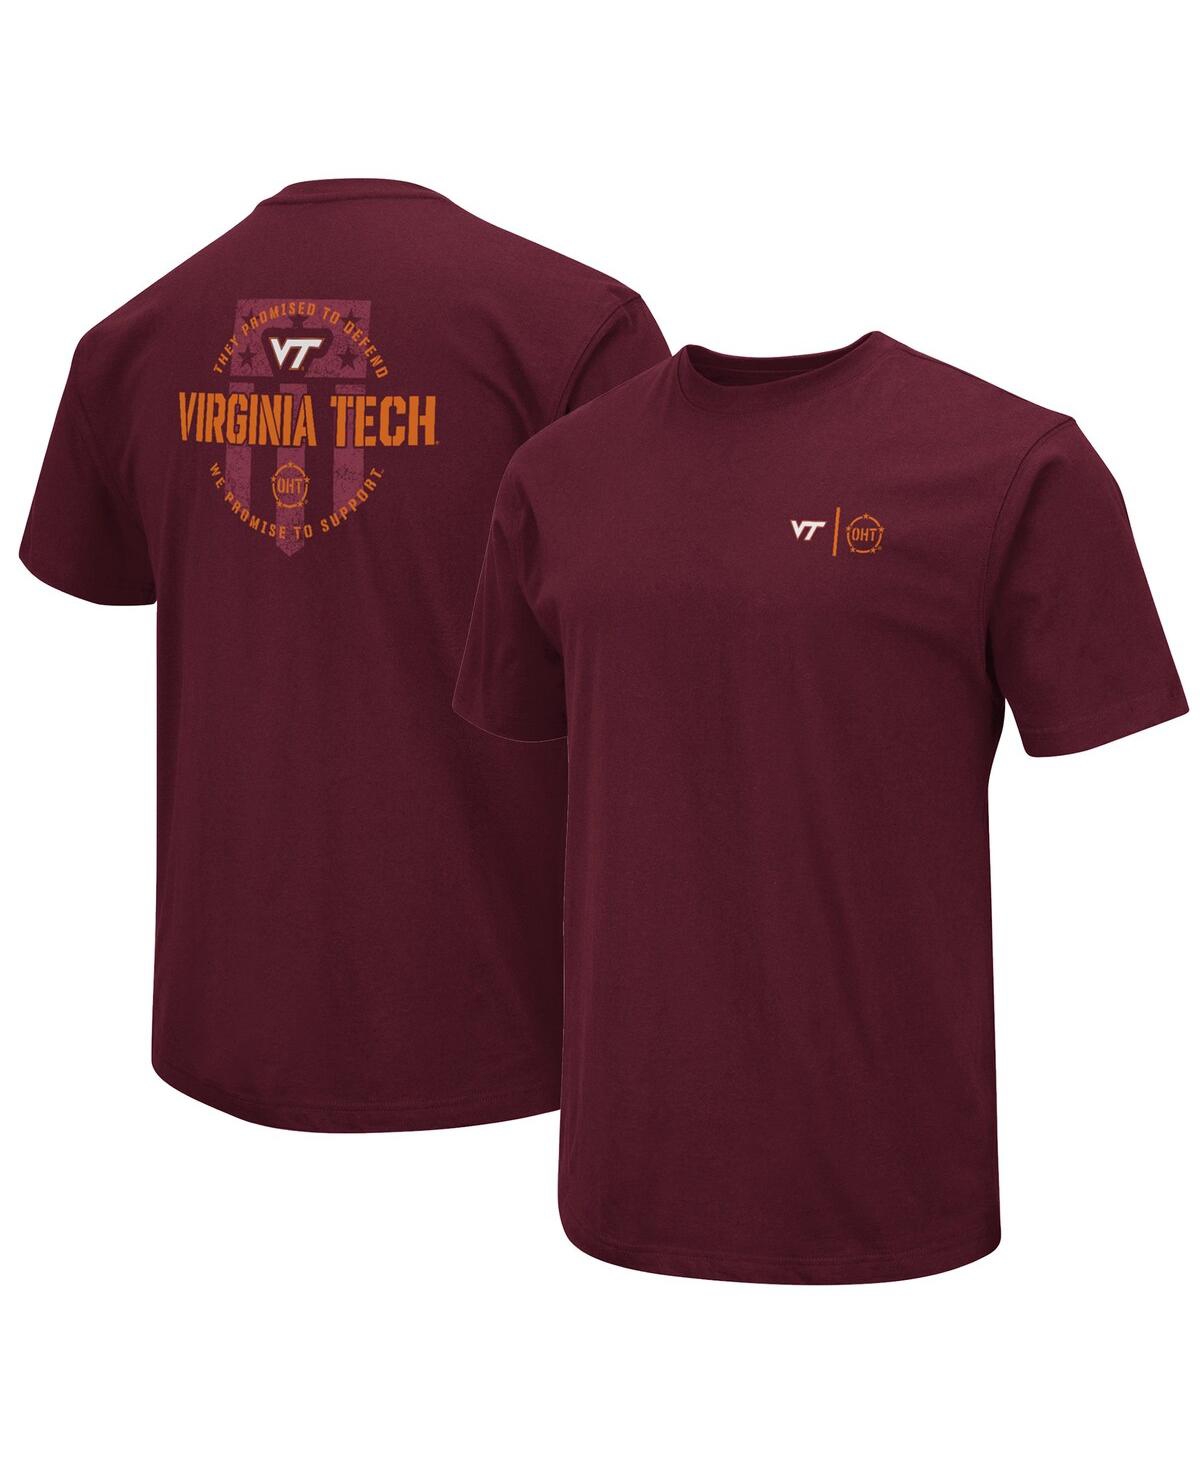 Men's Colosseum Maroon Virginia Tech Hokies Oht Military-Inspired Appreciation T-shirt - Maroon